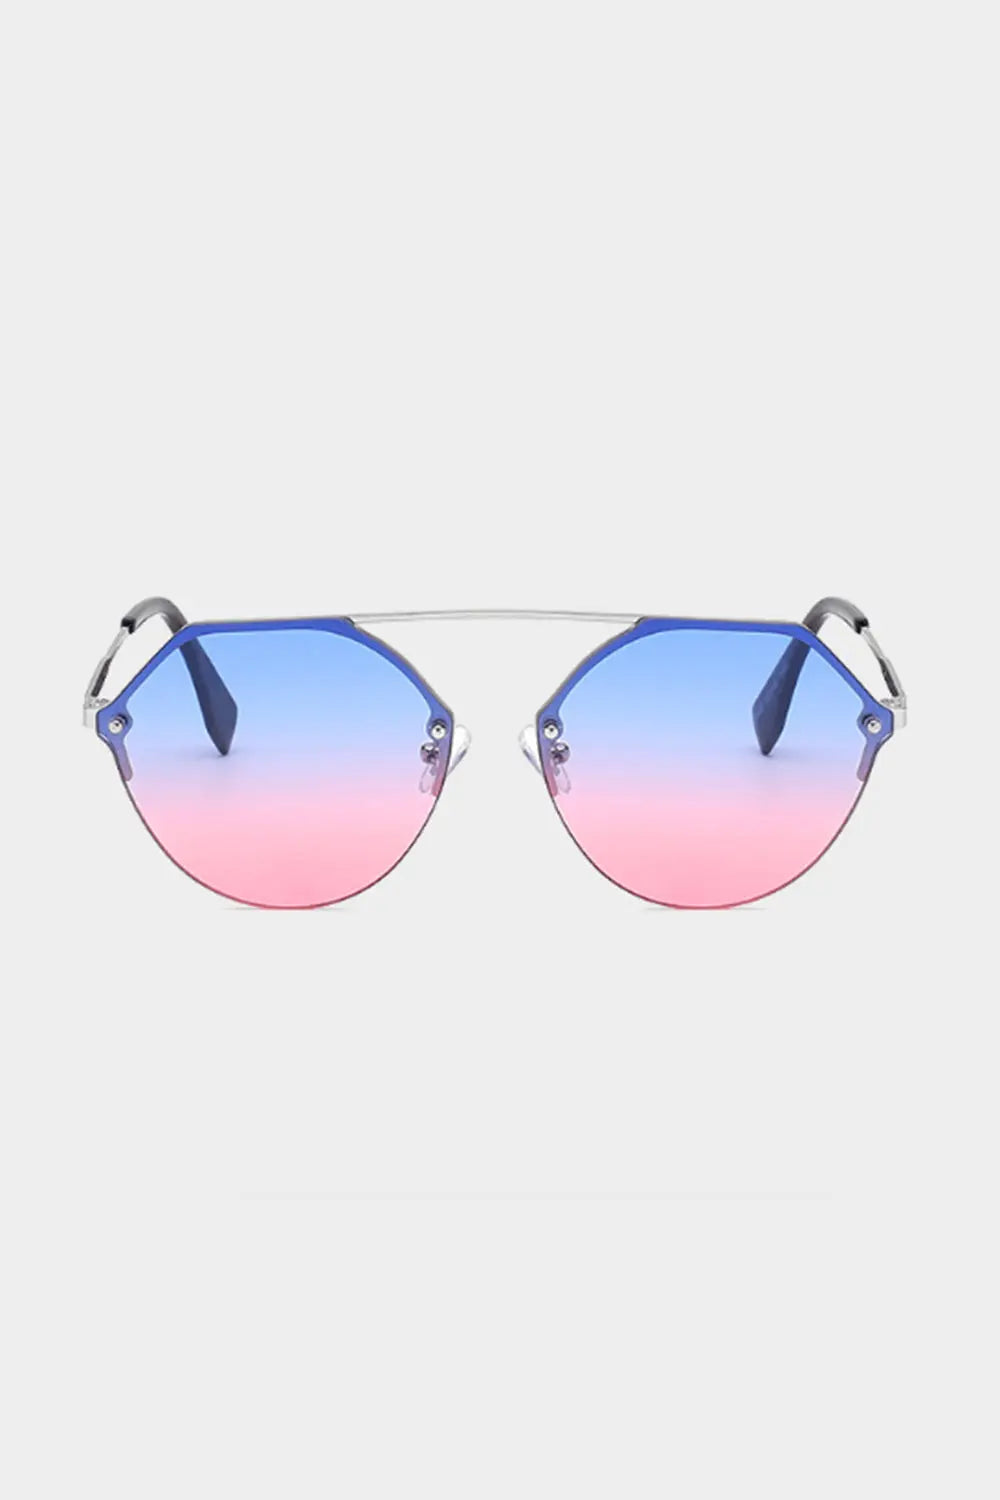 Diamond Polygon Sunglasses - Blue Pink - Strange Clothes